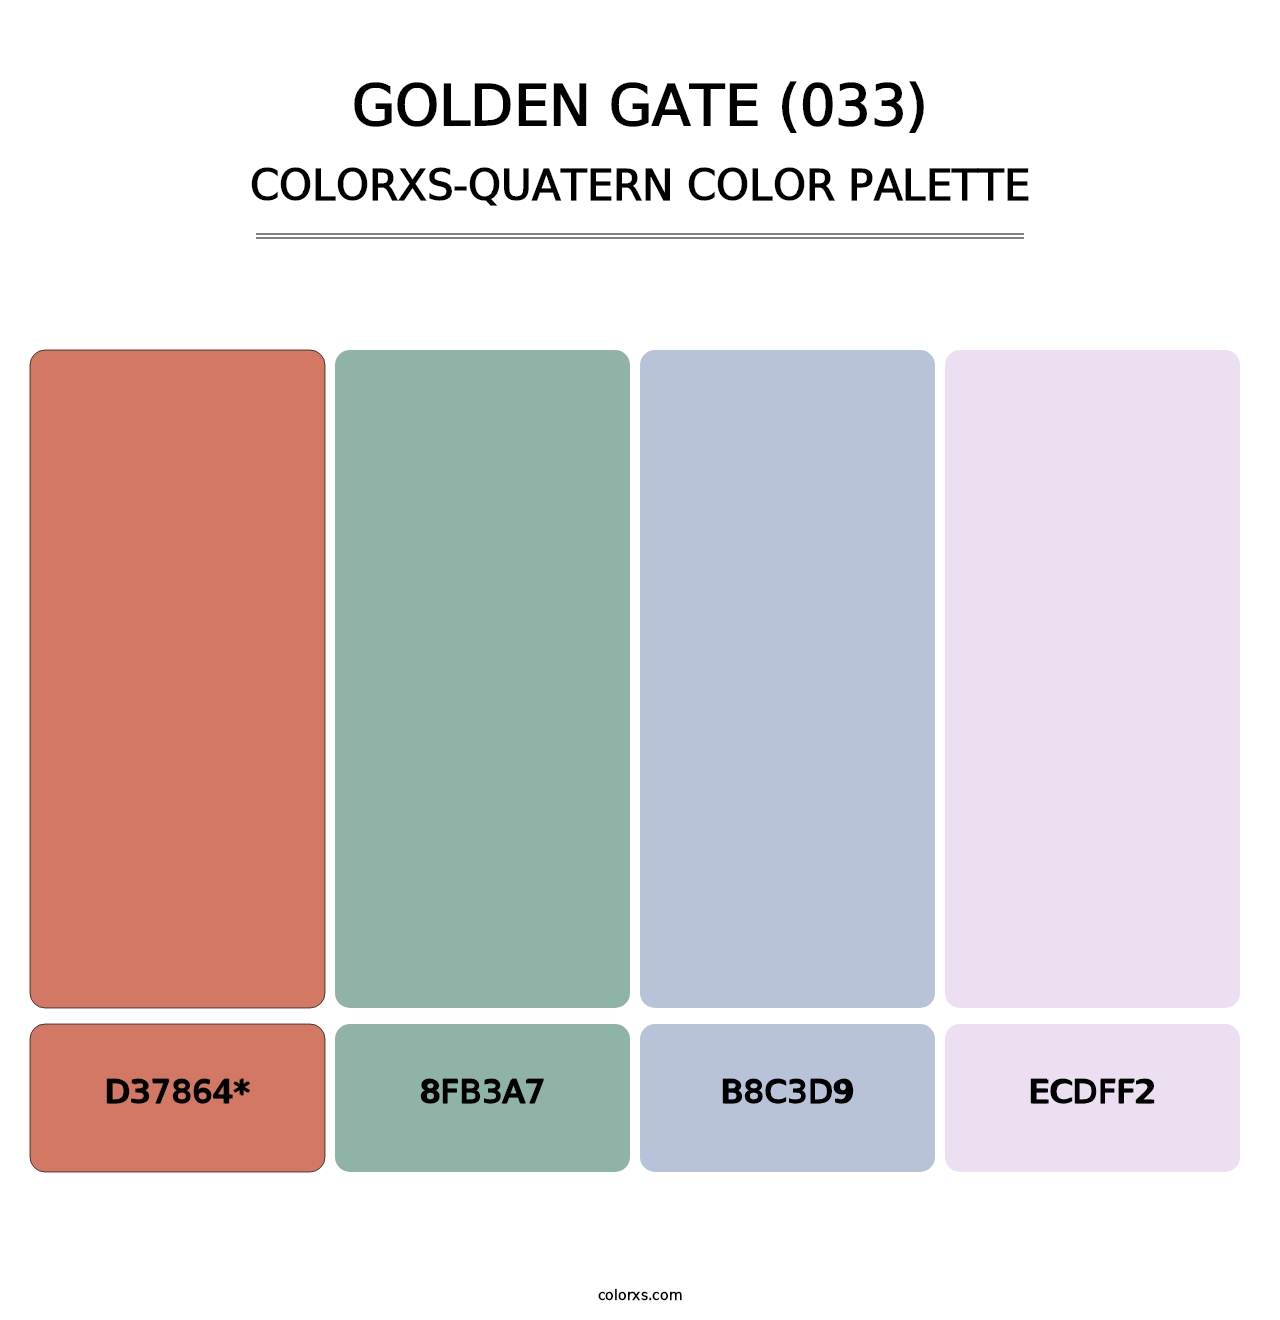 Golden Gate (033) - Colorxs Quatern Palette